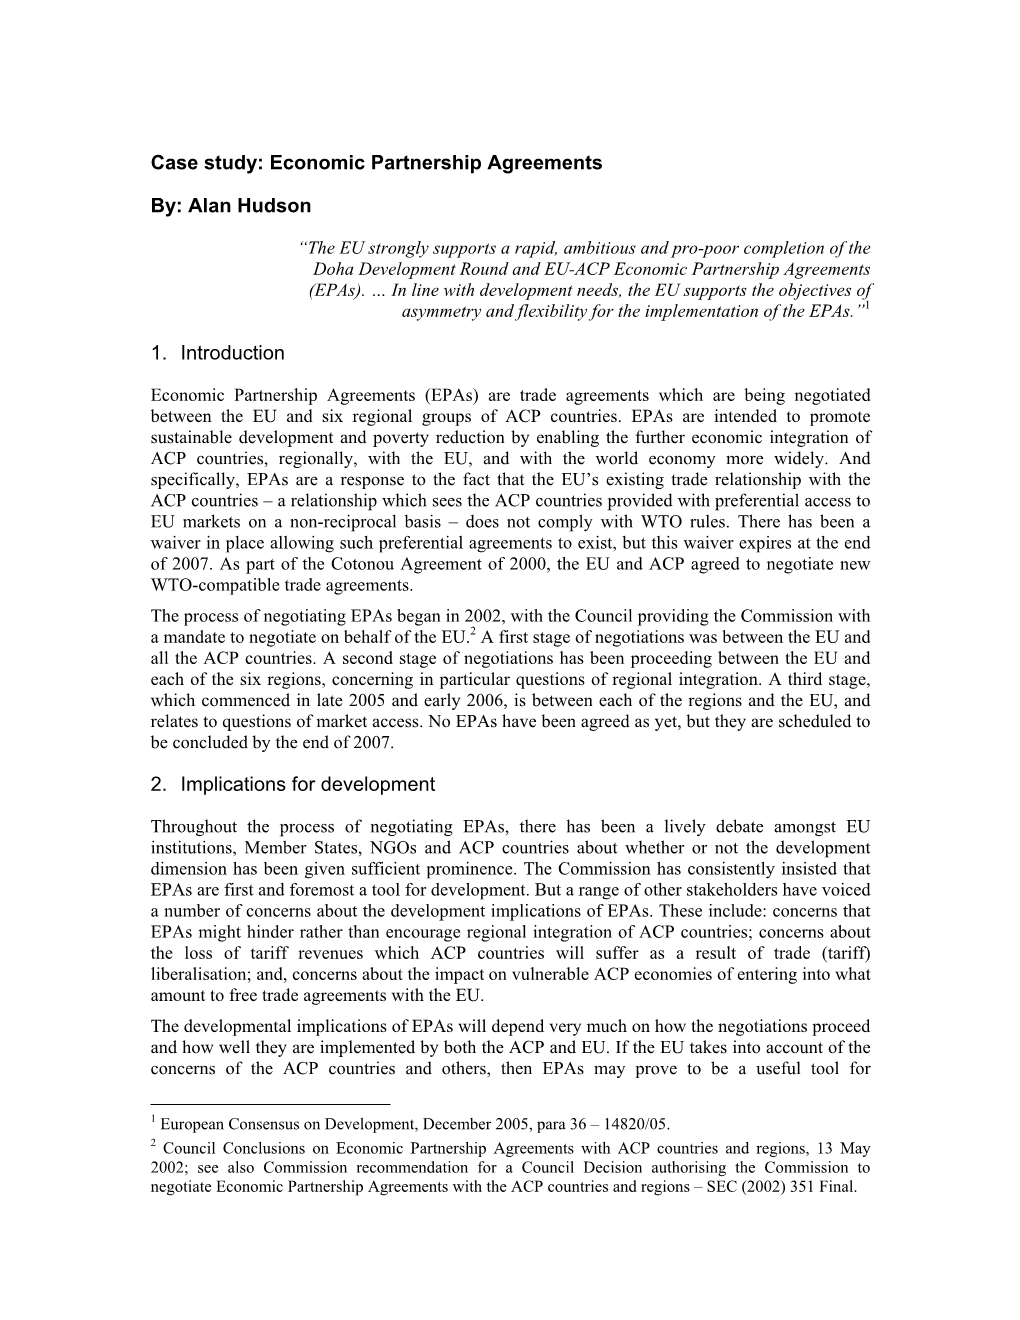 Case Study: Economic Partnership Agreements By: Alan Hudson